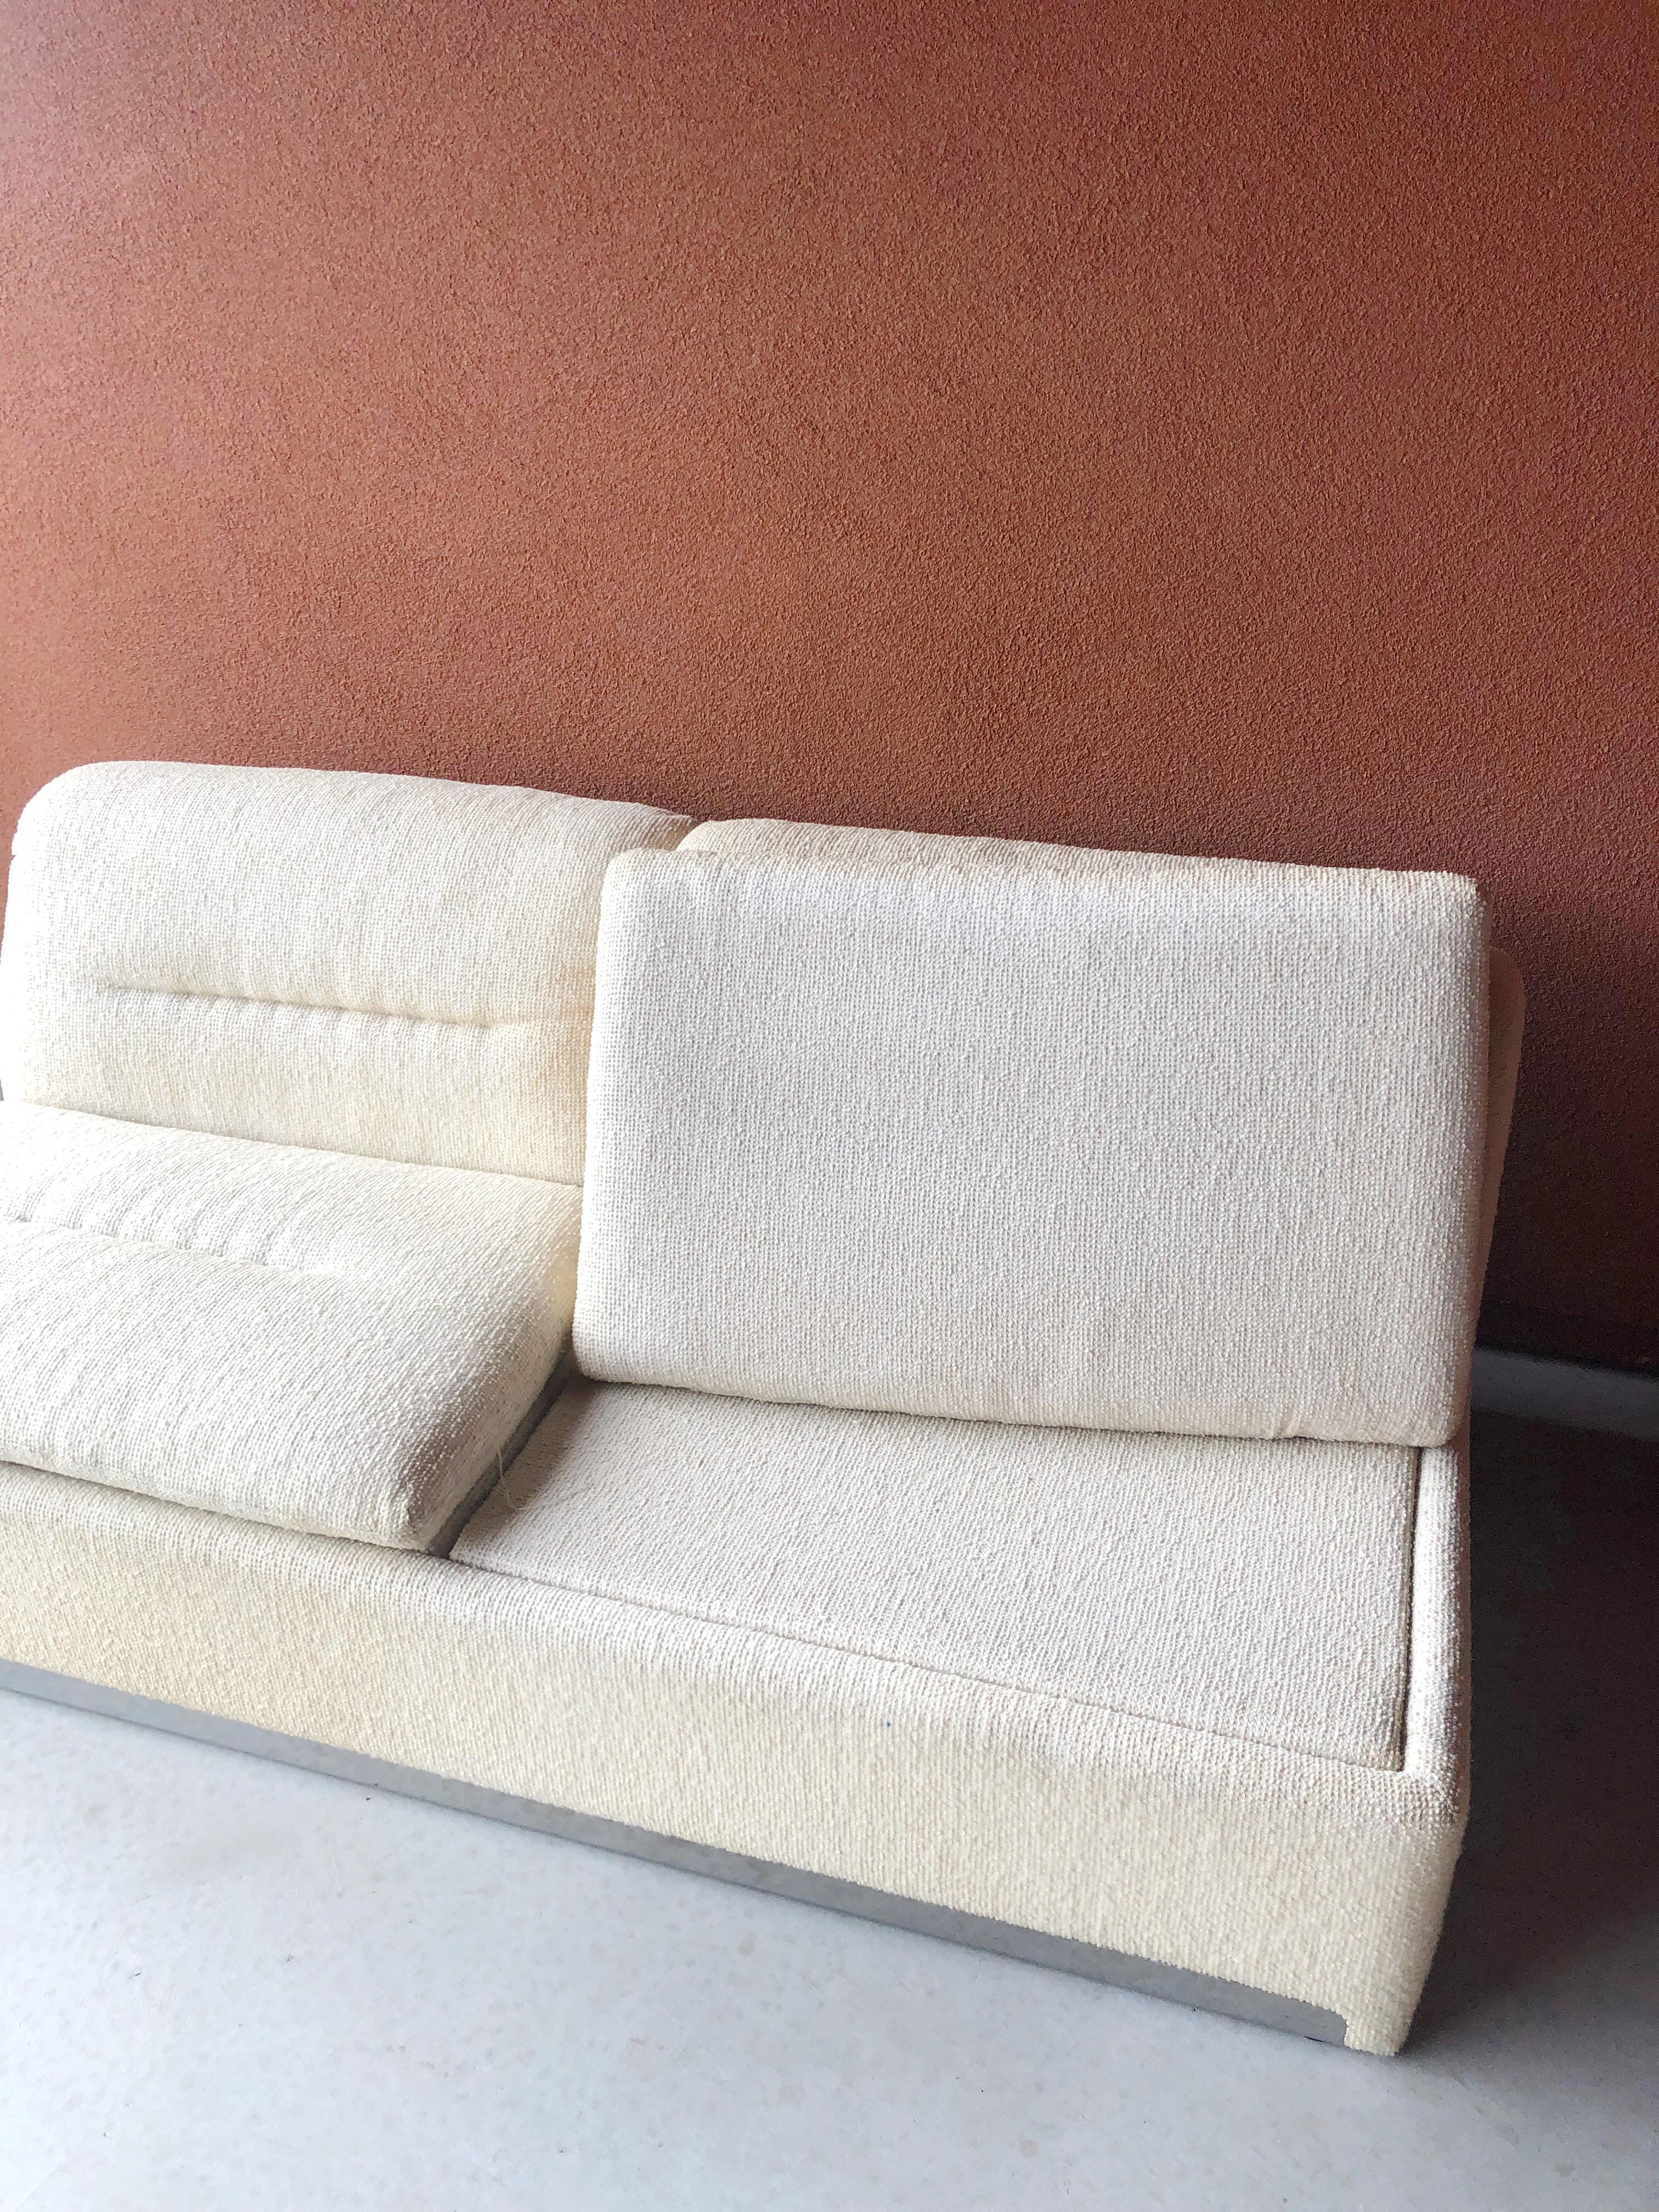 Late 20th Century Saporiti Proposals Modular Armchair/Loveseat Sofa in Ivory Boucle, c. 1970s